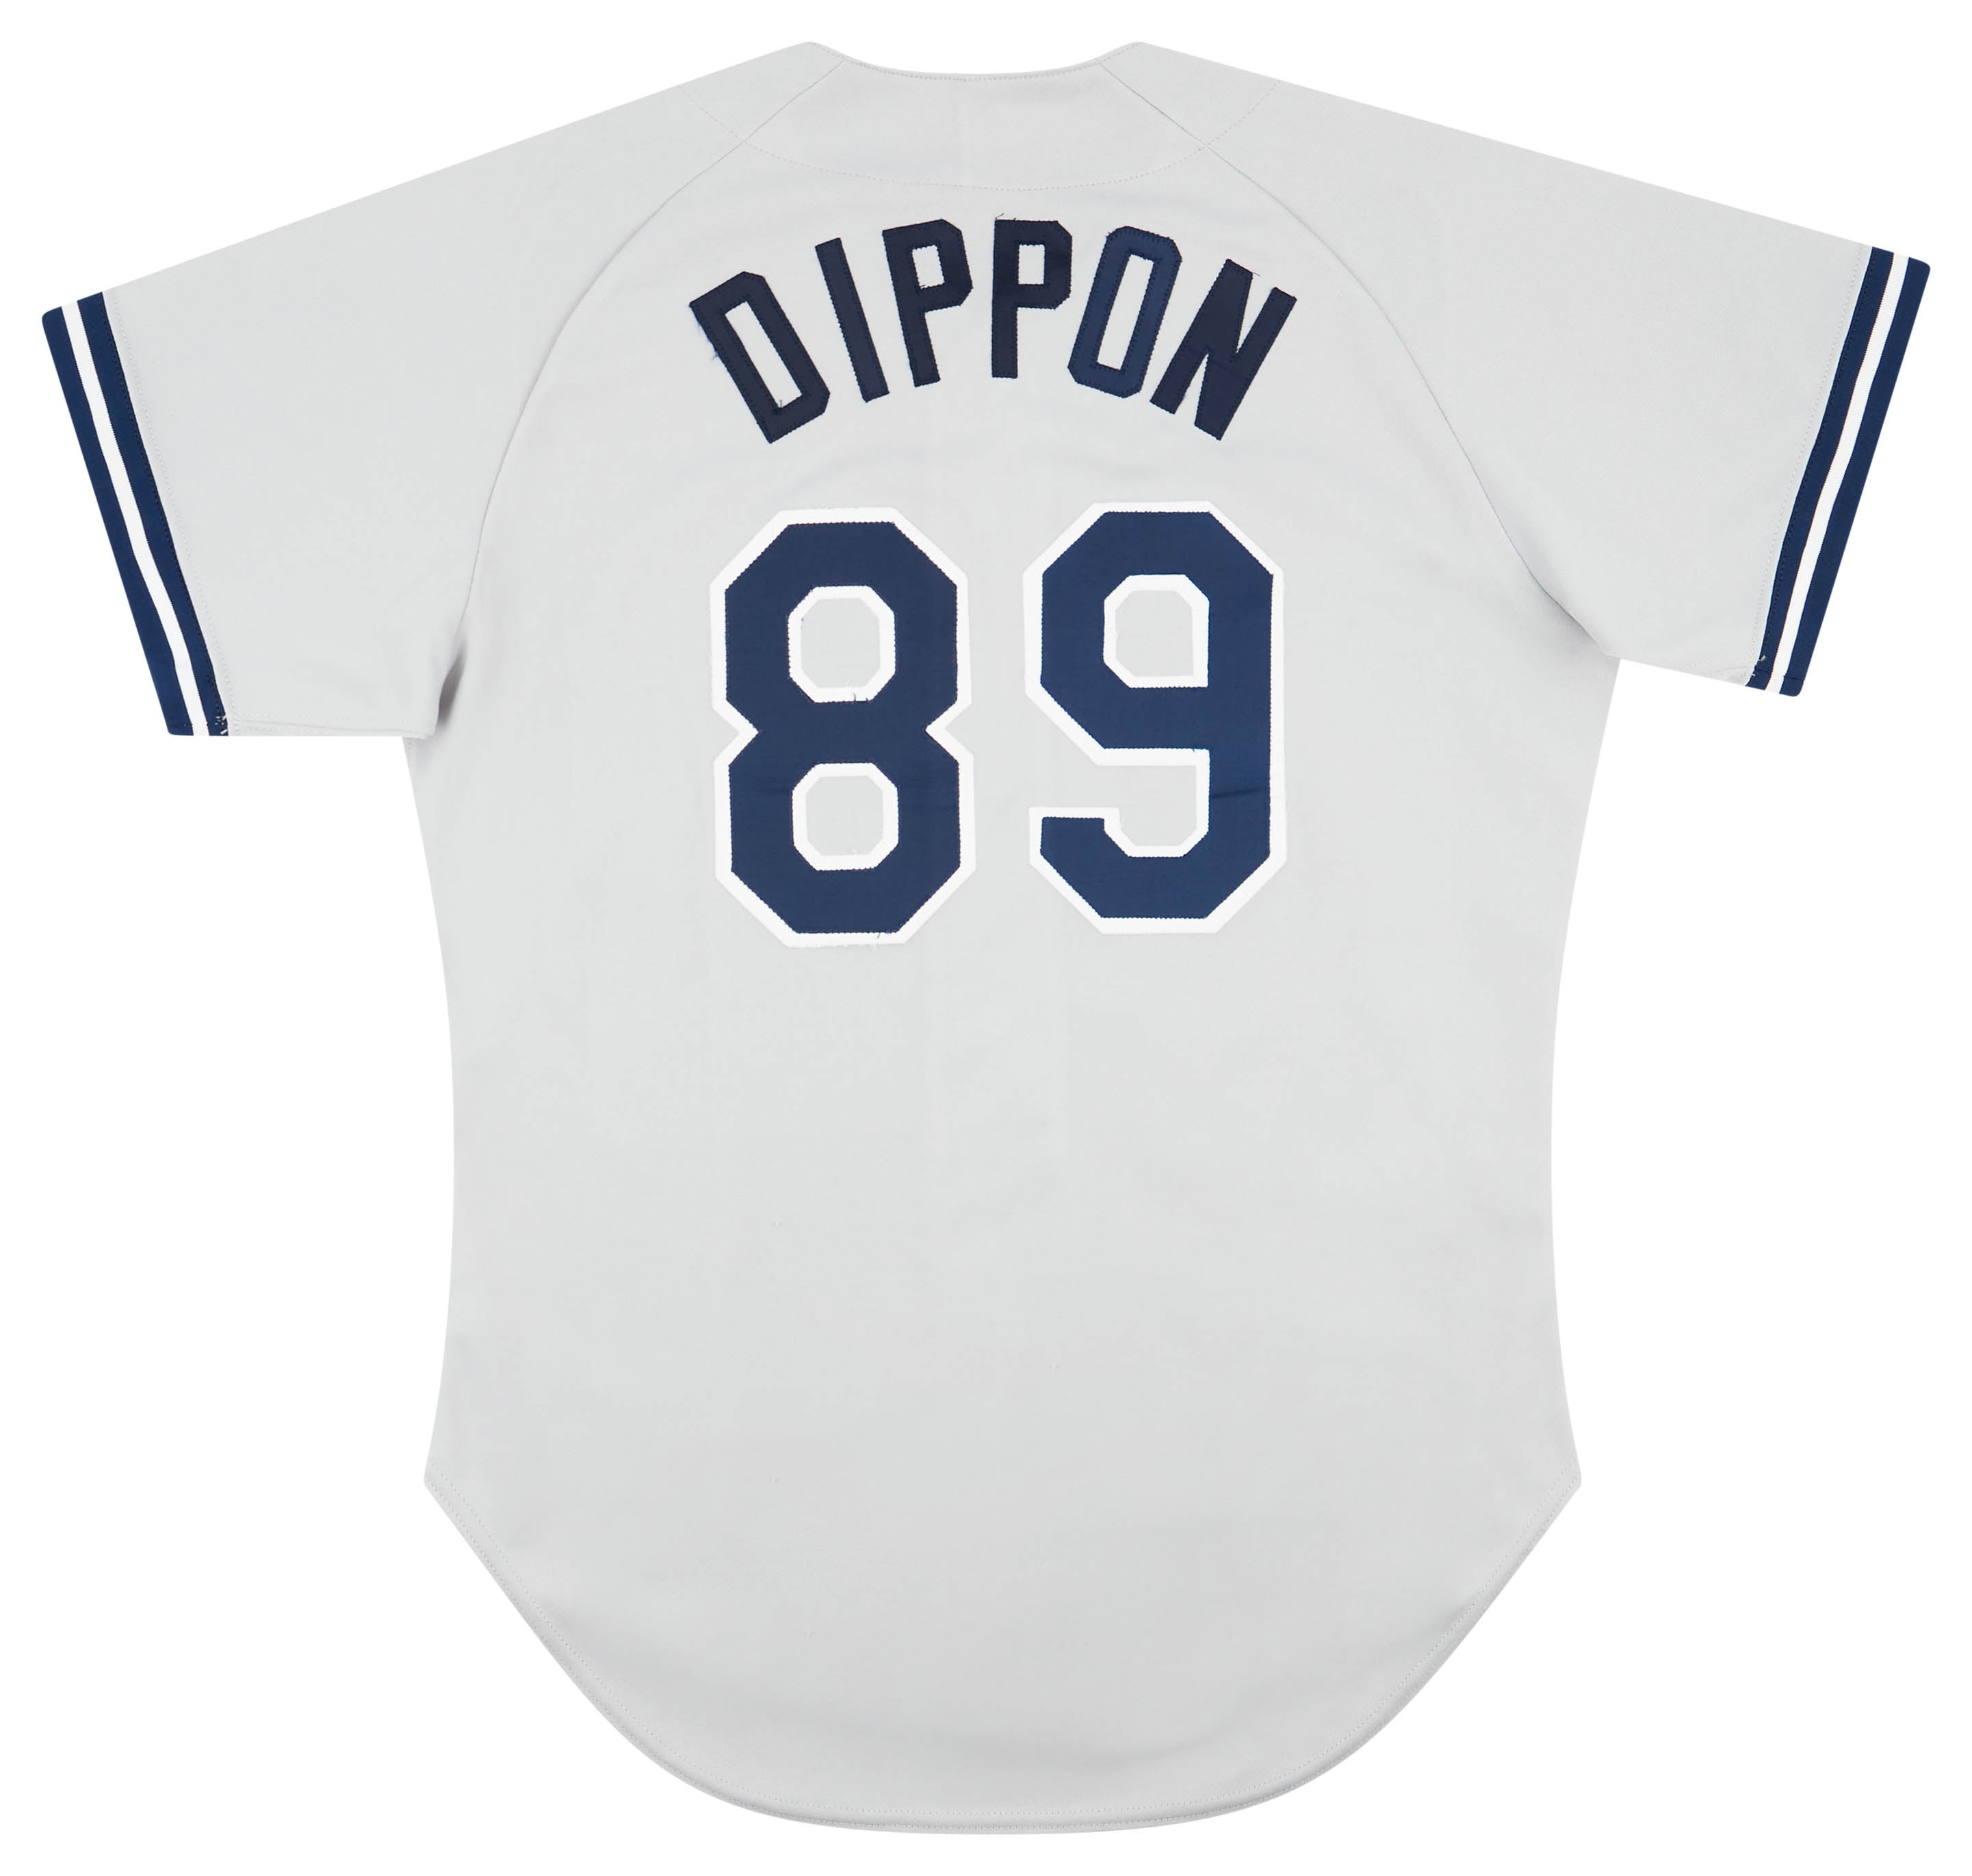 MLB New York Dodgers #32 Felt Embroidered Jersey (L-XL)